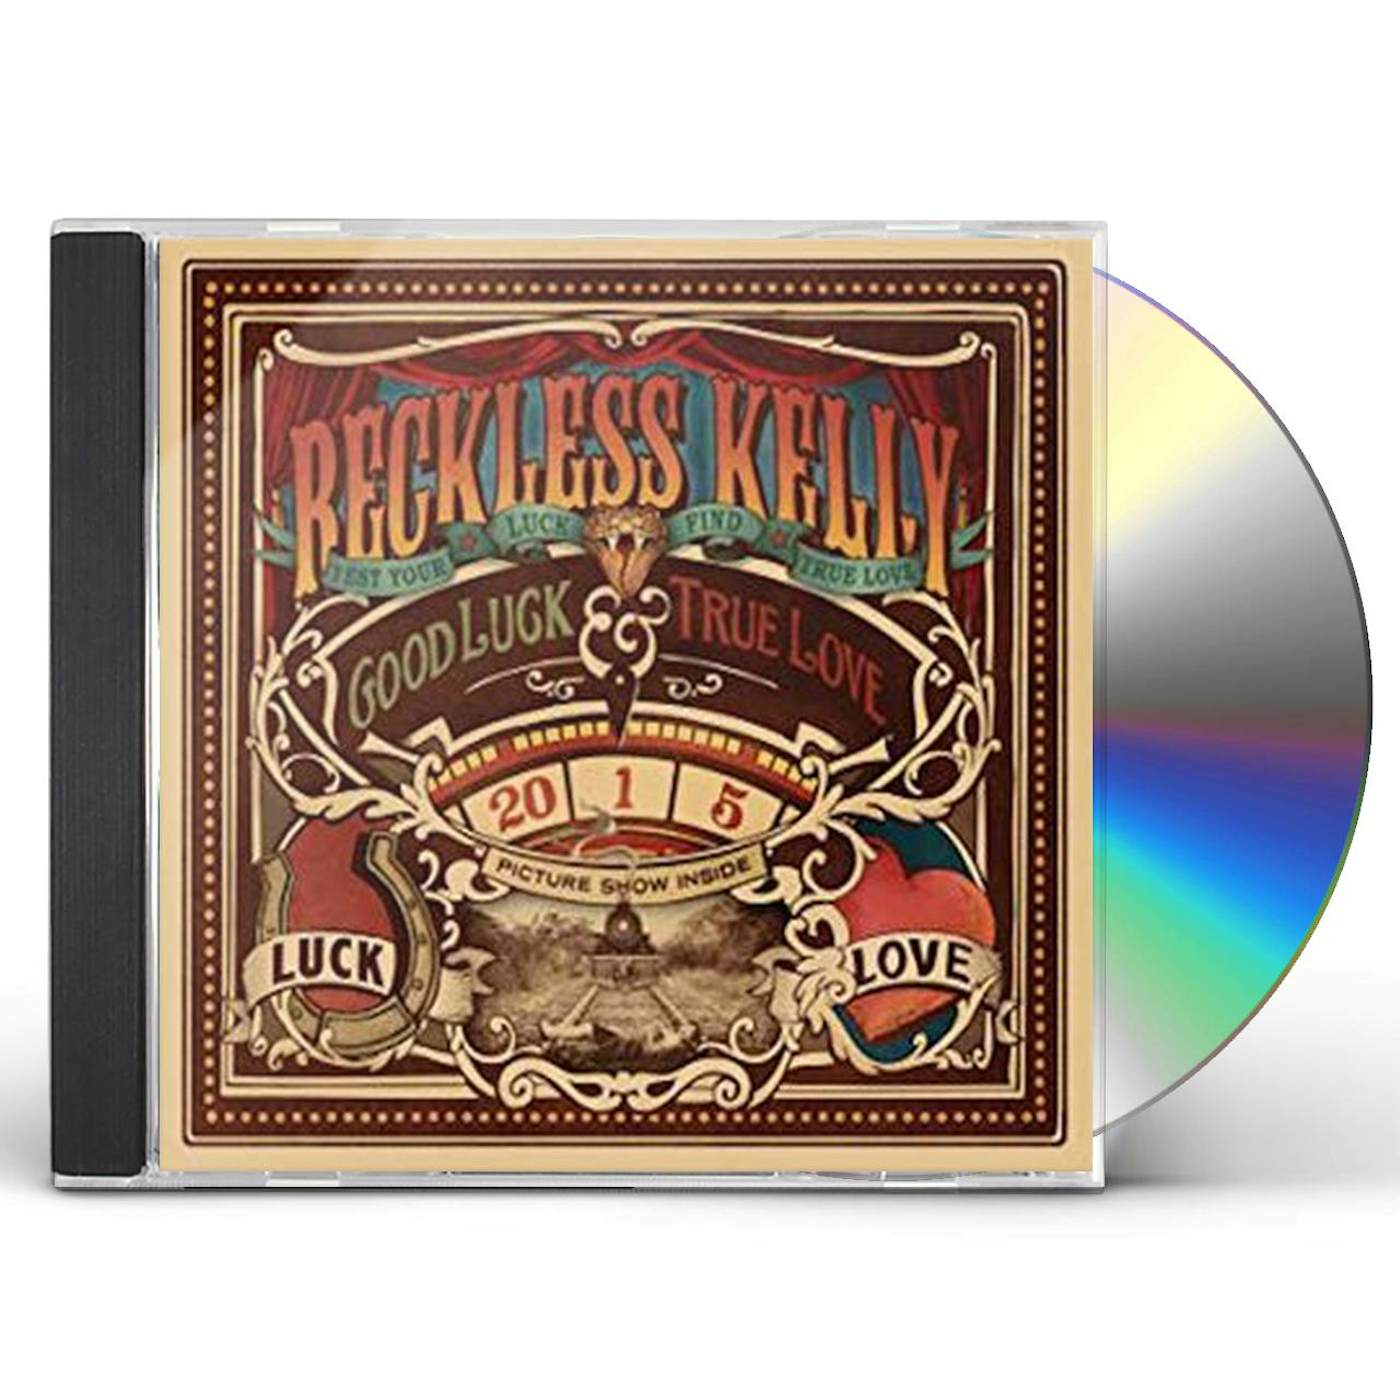 Reckless Kelly Good Luck & True Love CD